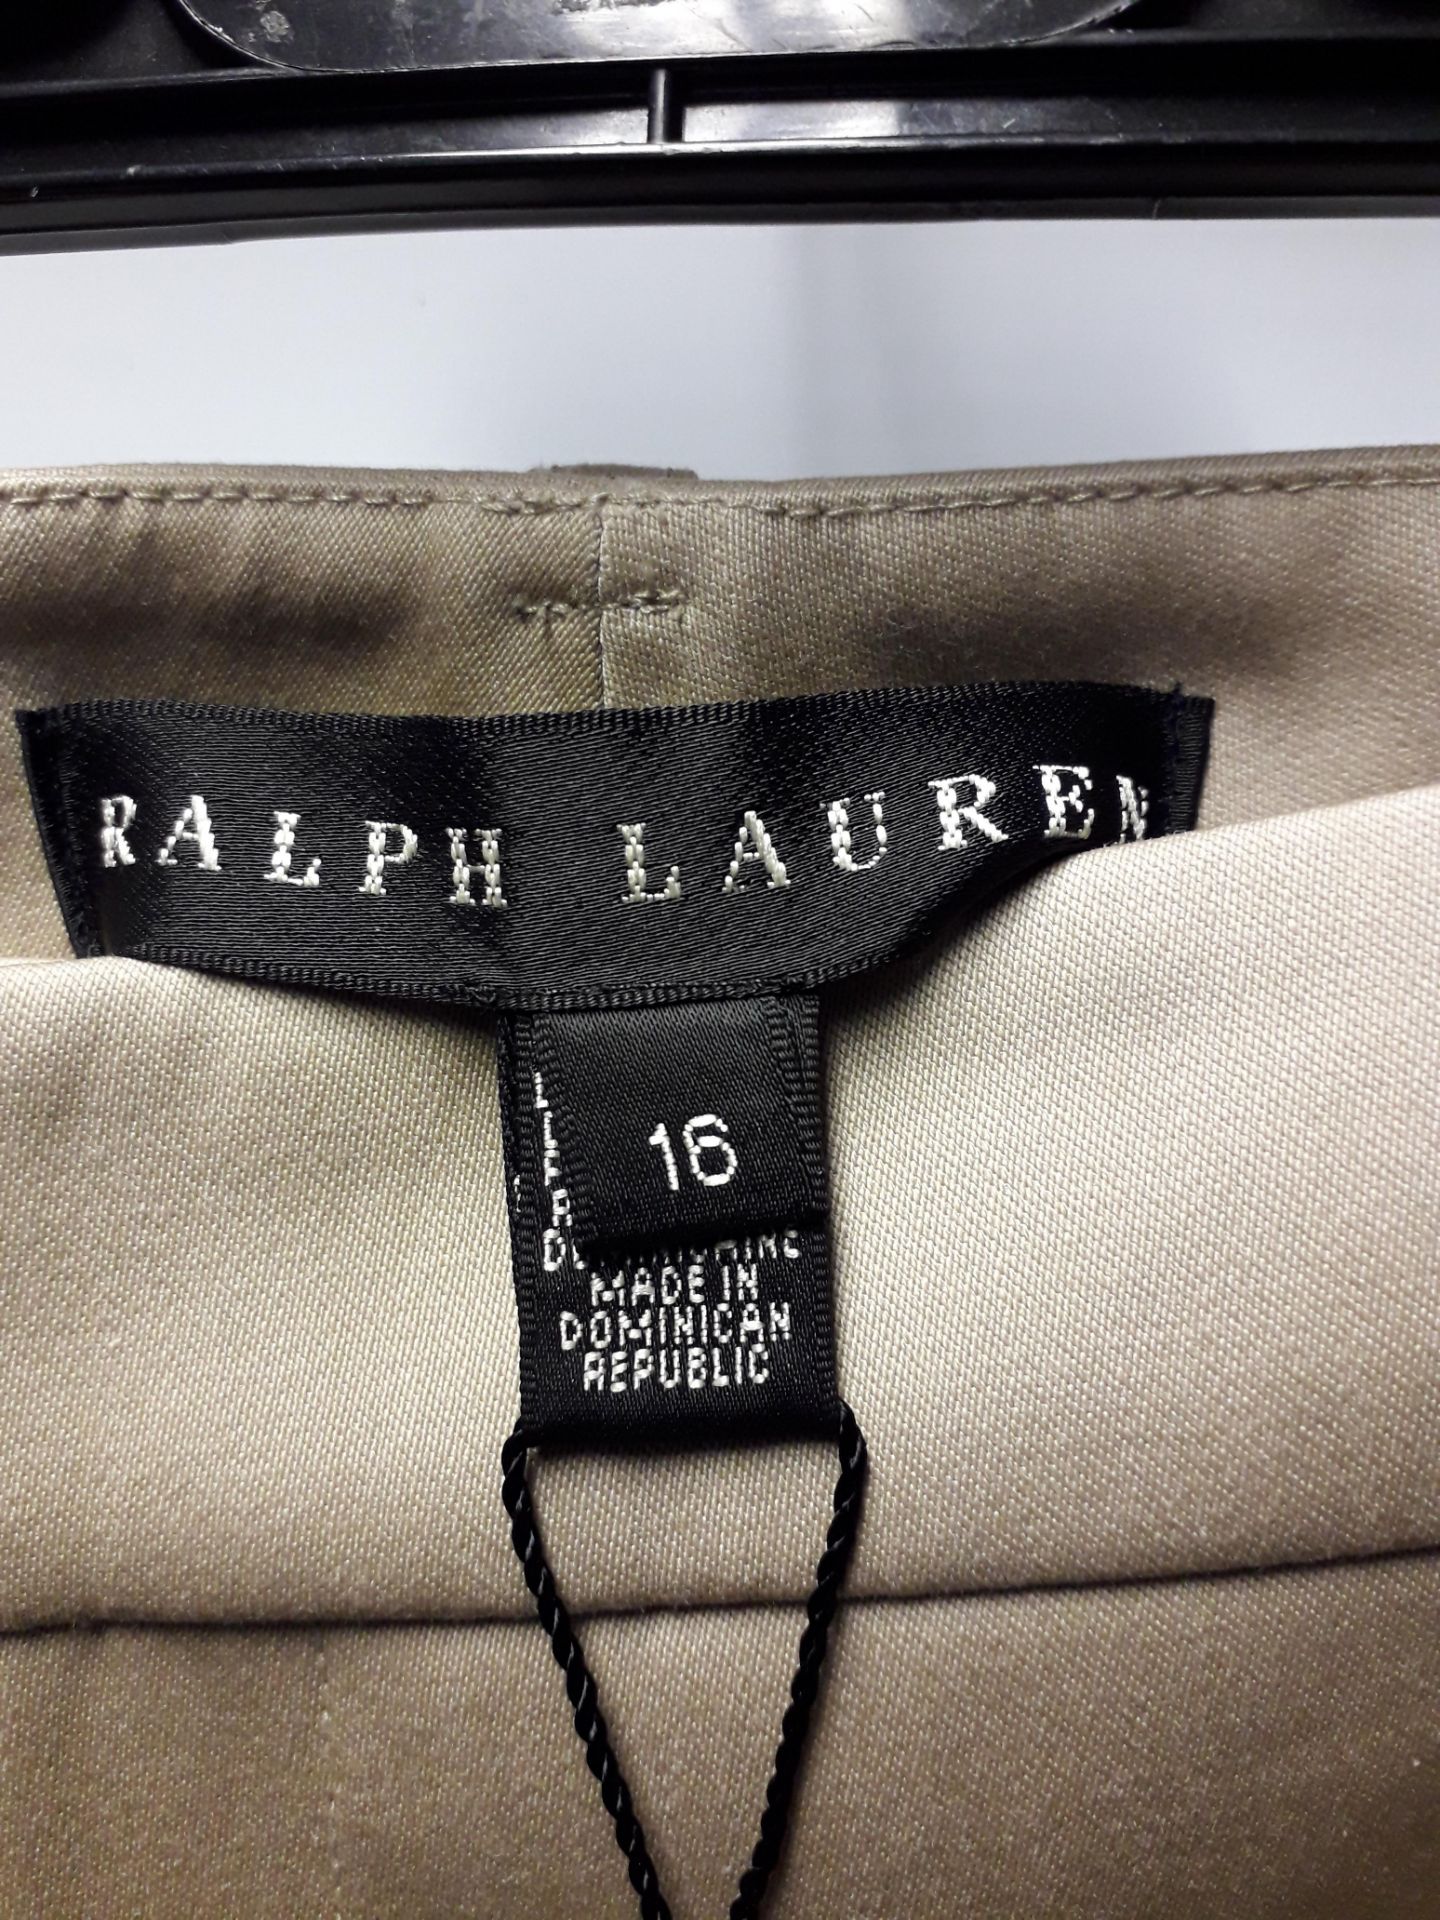 1 x Ralph Lauren Beige Heidi Trousers - Size: 16 - Material: 58% Wool, 40% Cotton, 2% Elastane - - Image 3 of 4